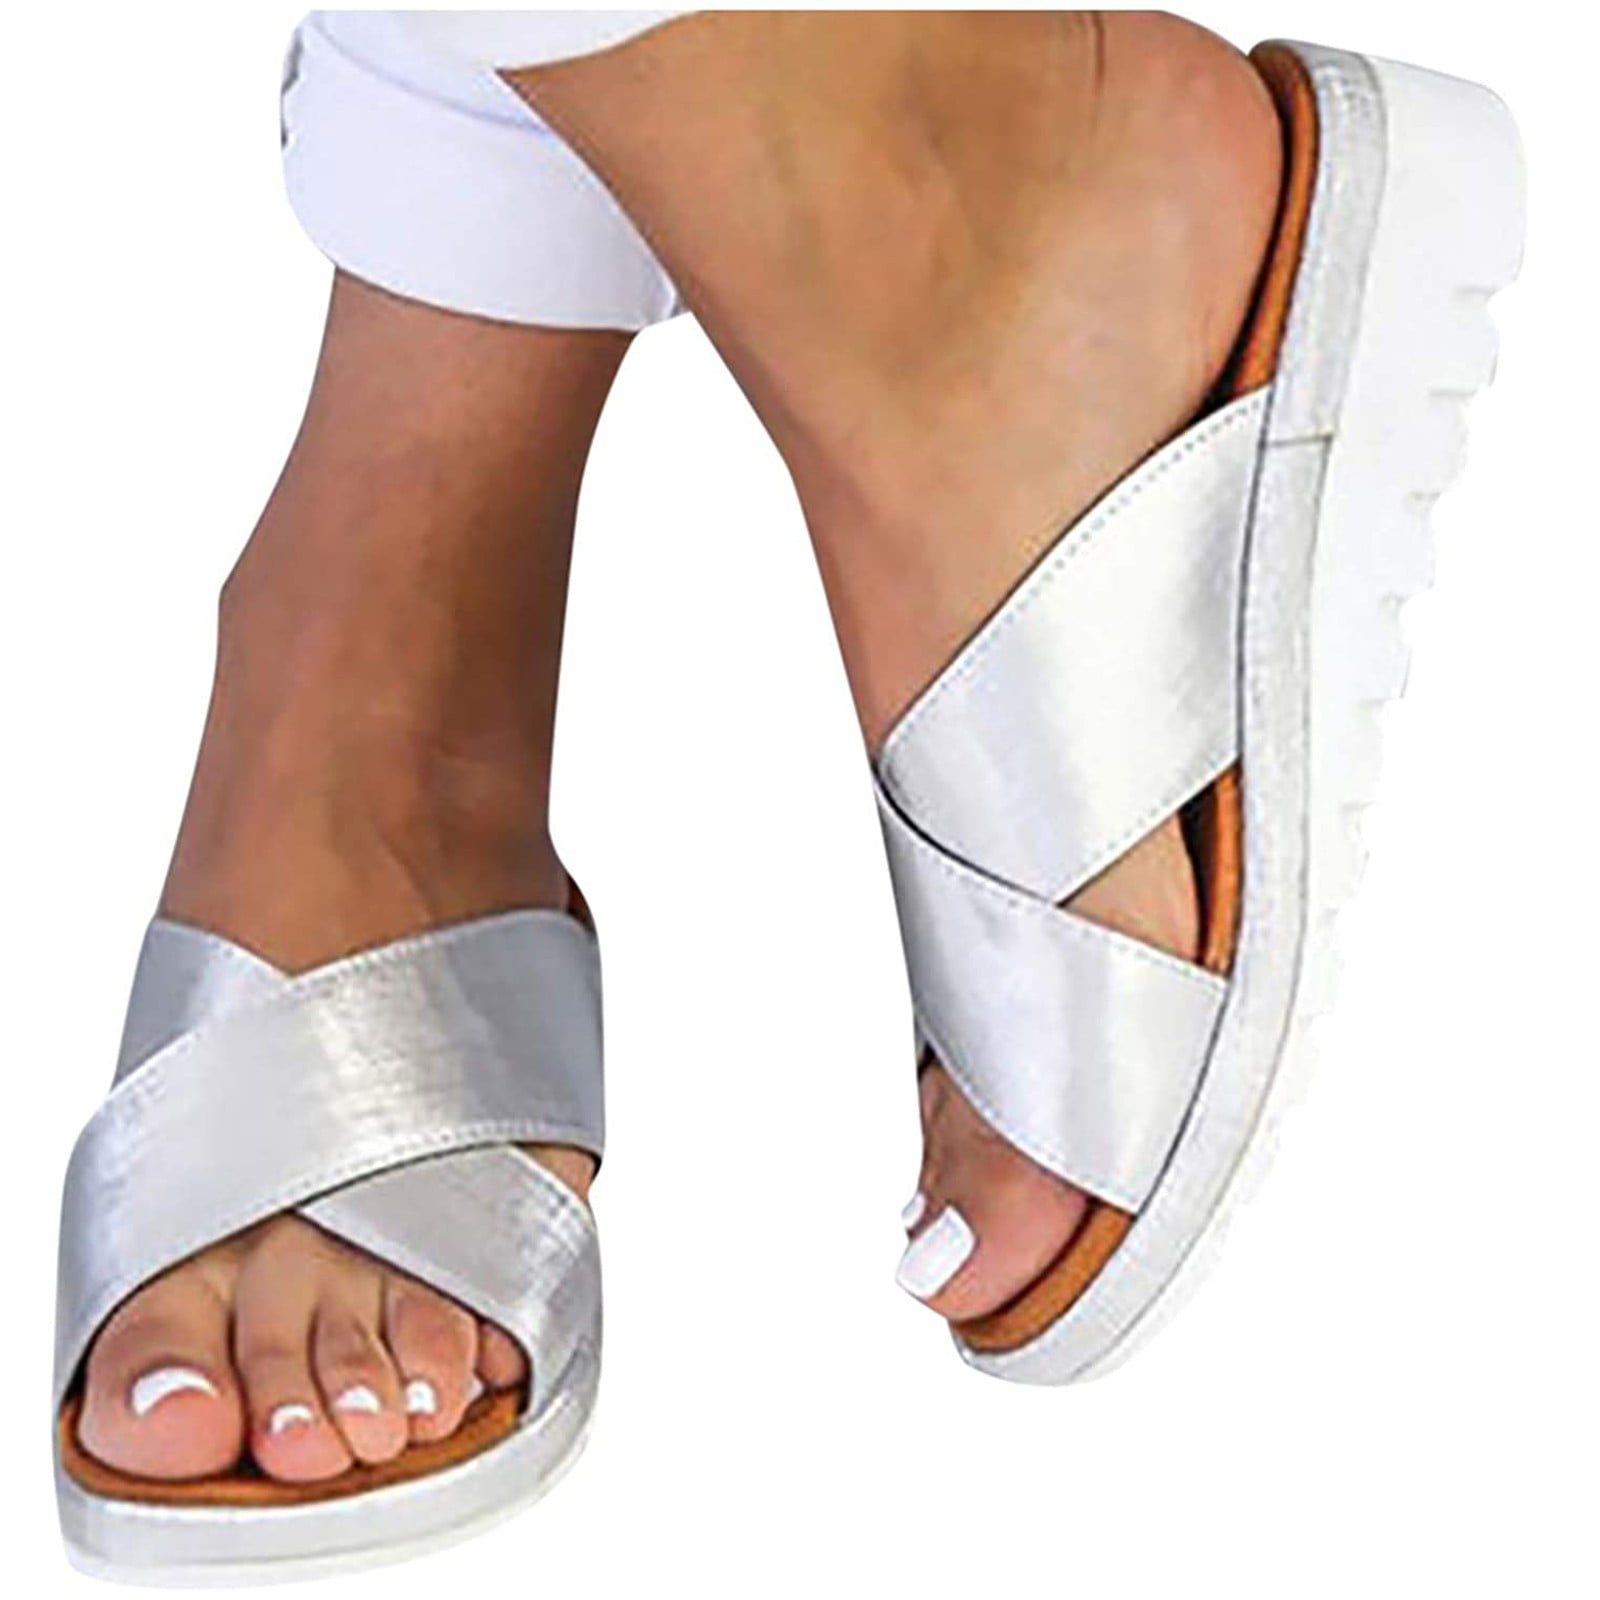 Sandals for Women Flat,Womens 2020 T-Strap Comfy Platform Sandal Shoes Summer Beach Travel Fashion Slipper Flip Flops 